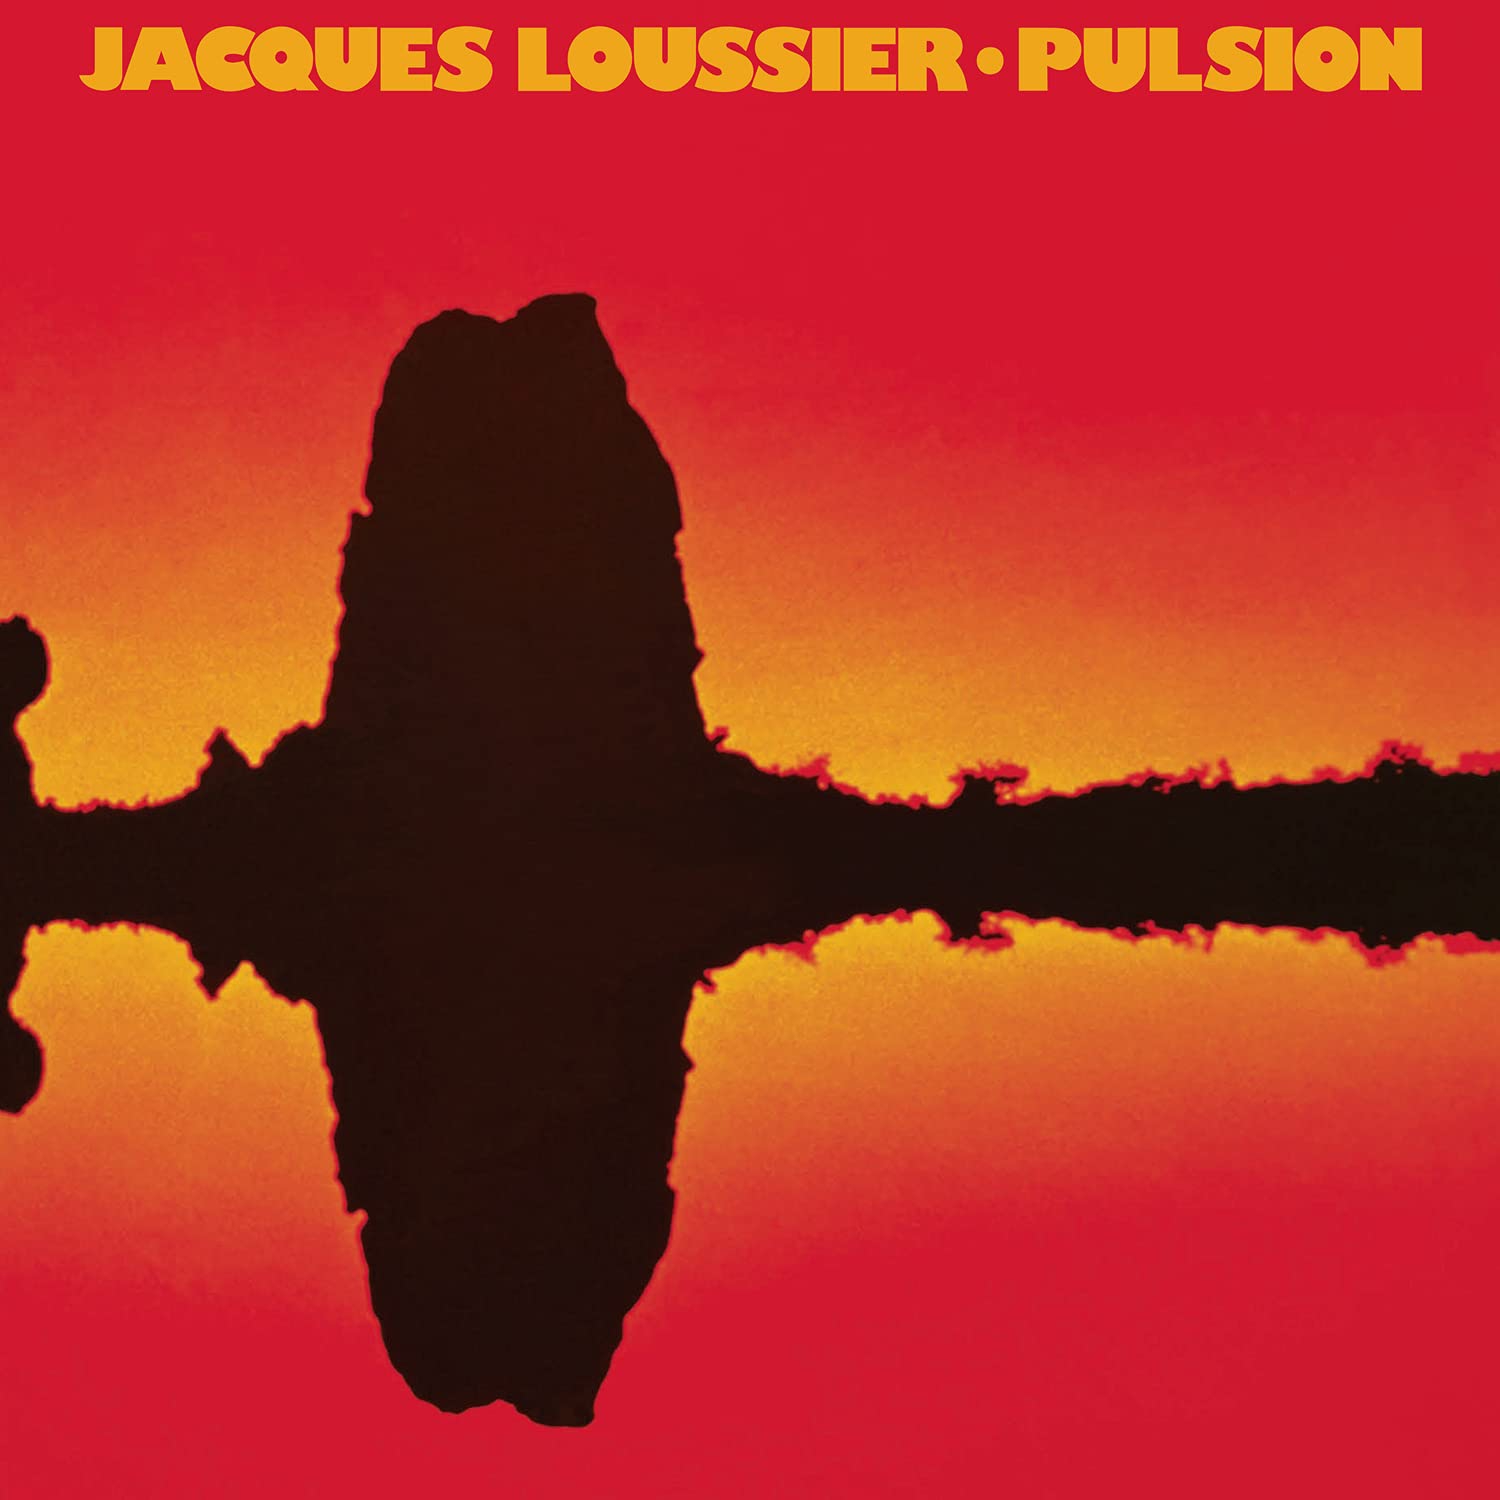 JACQUES LOUSSIER – PULSION ON